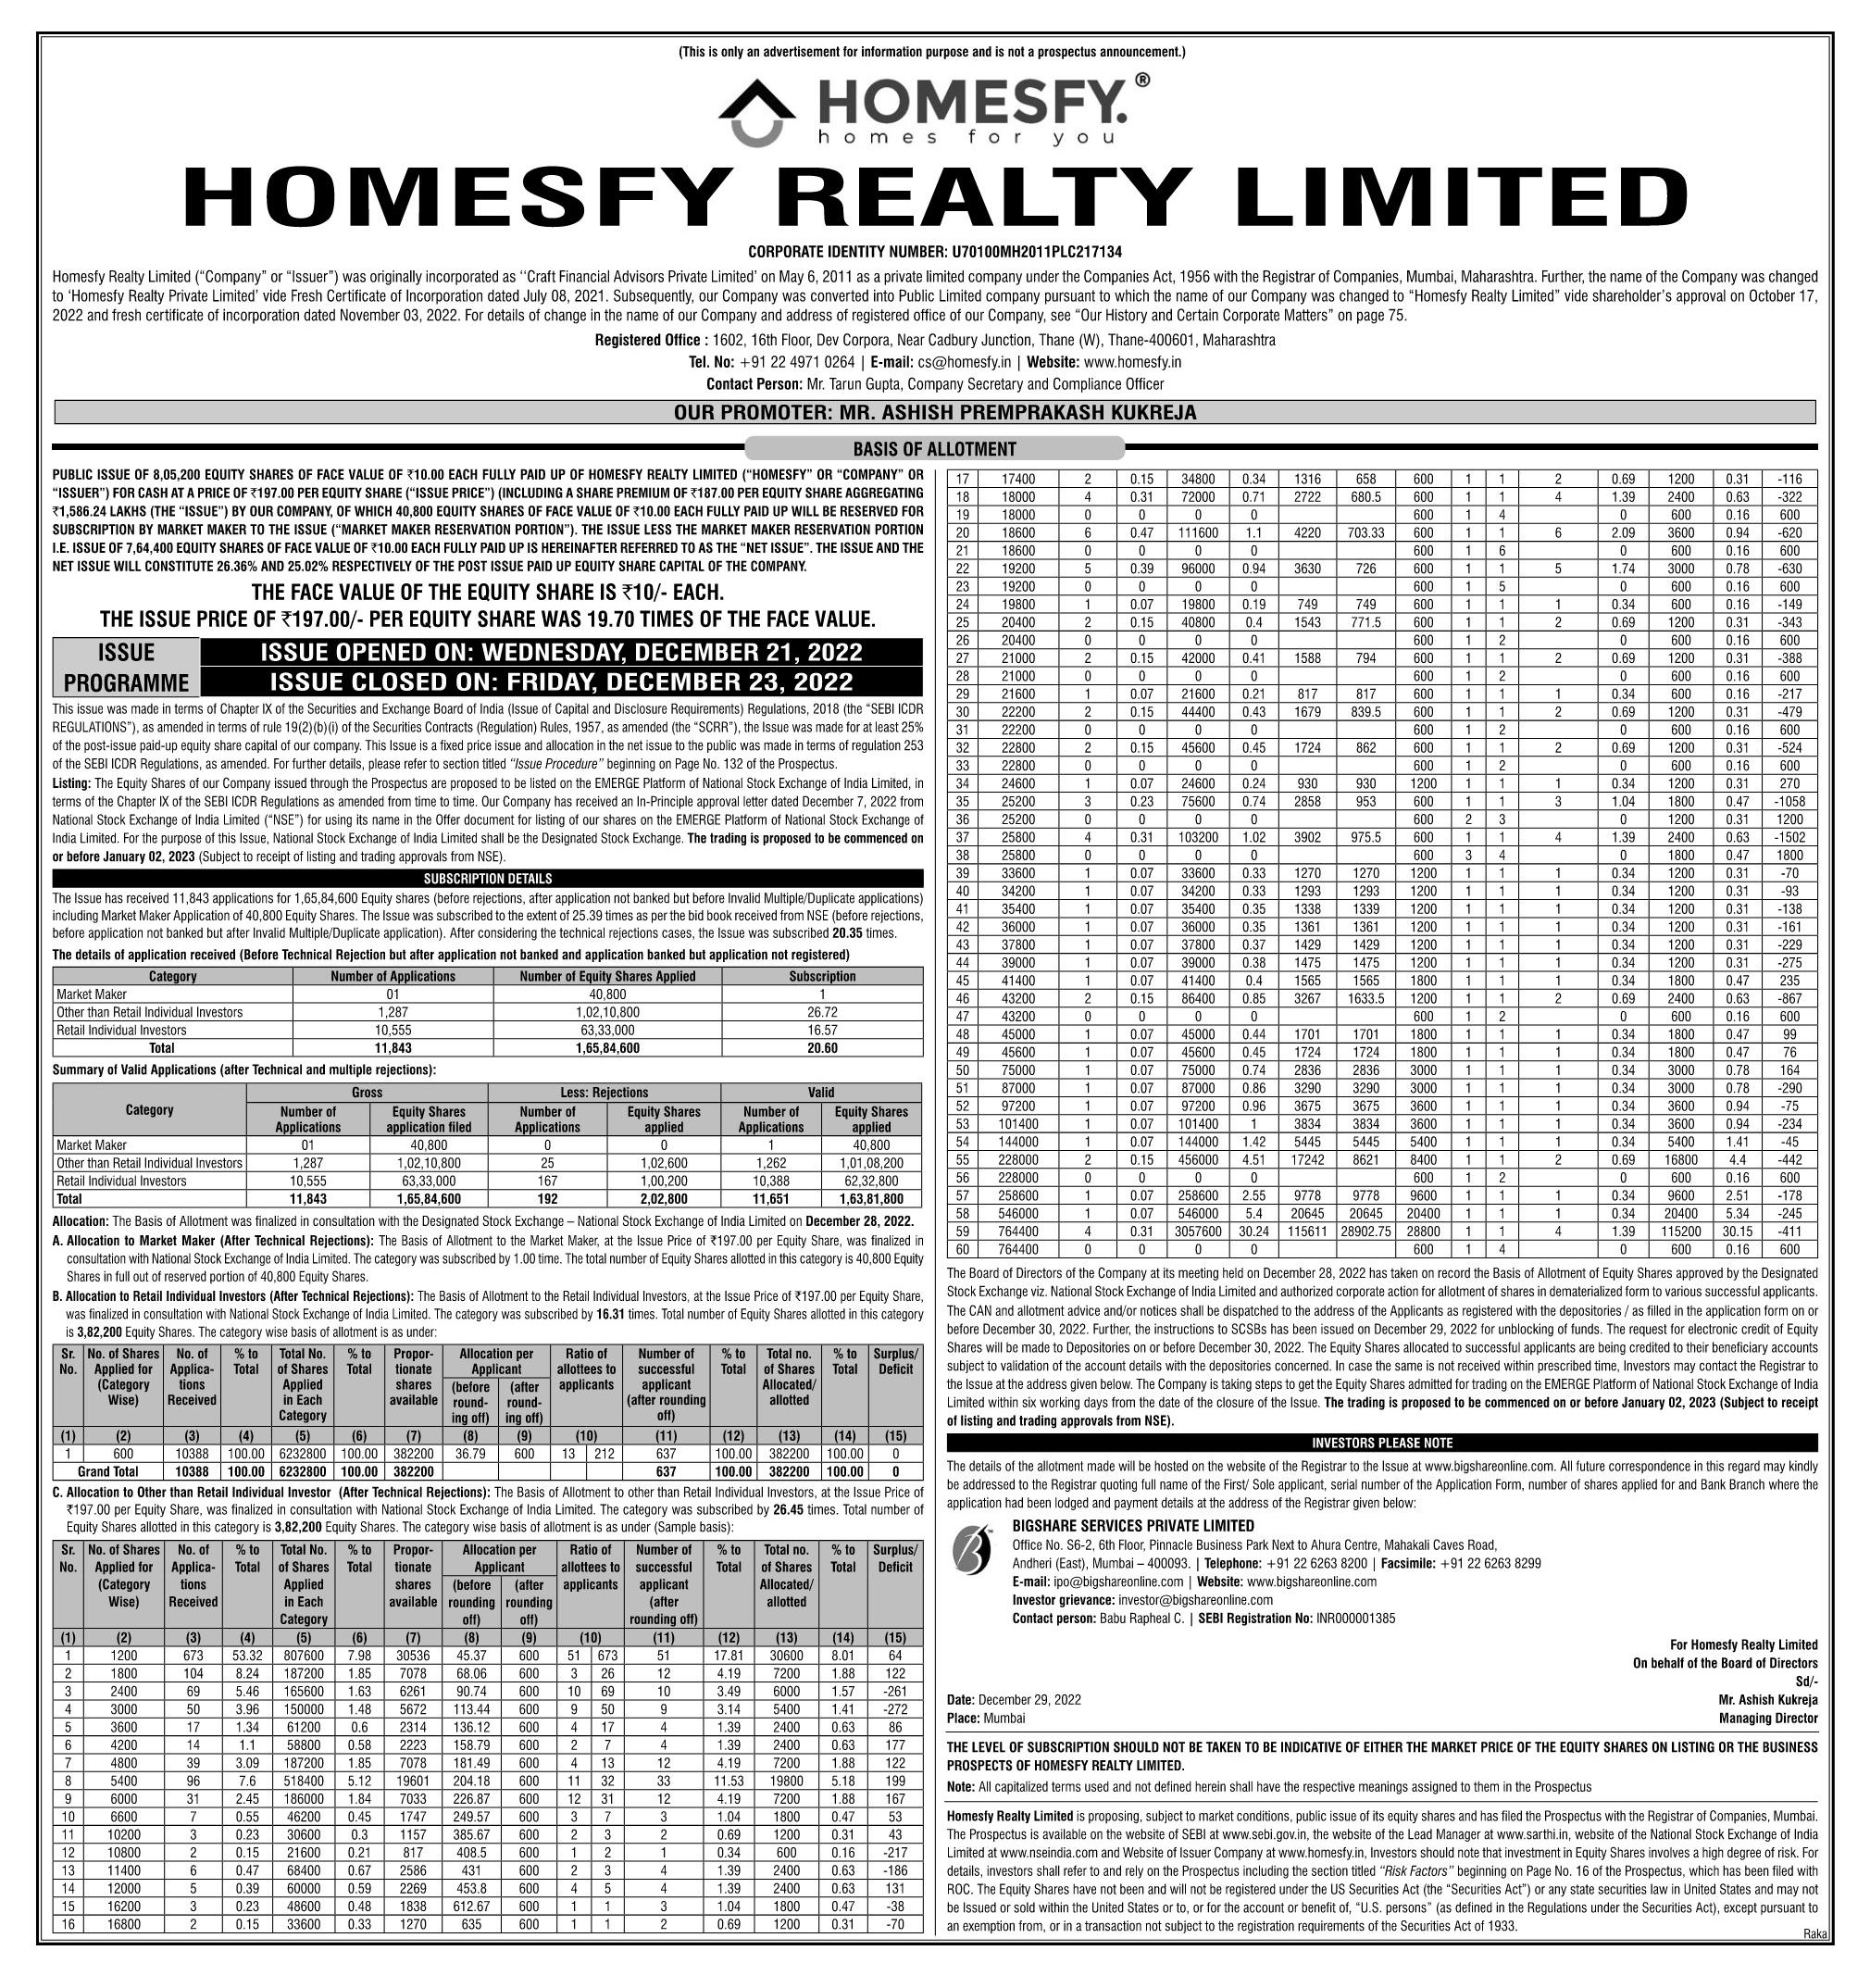 Homesfy Realty Limited IPO Basis of Allotment